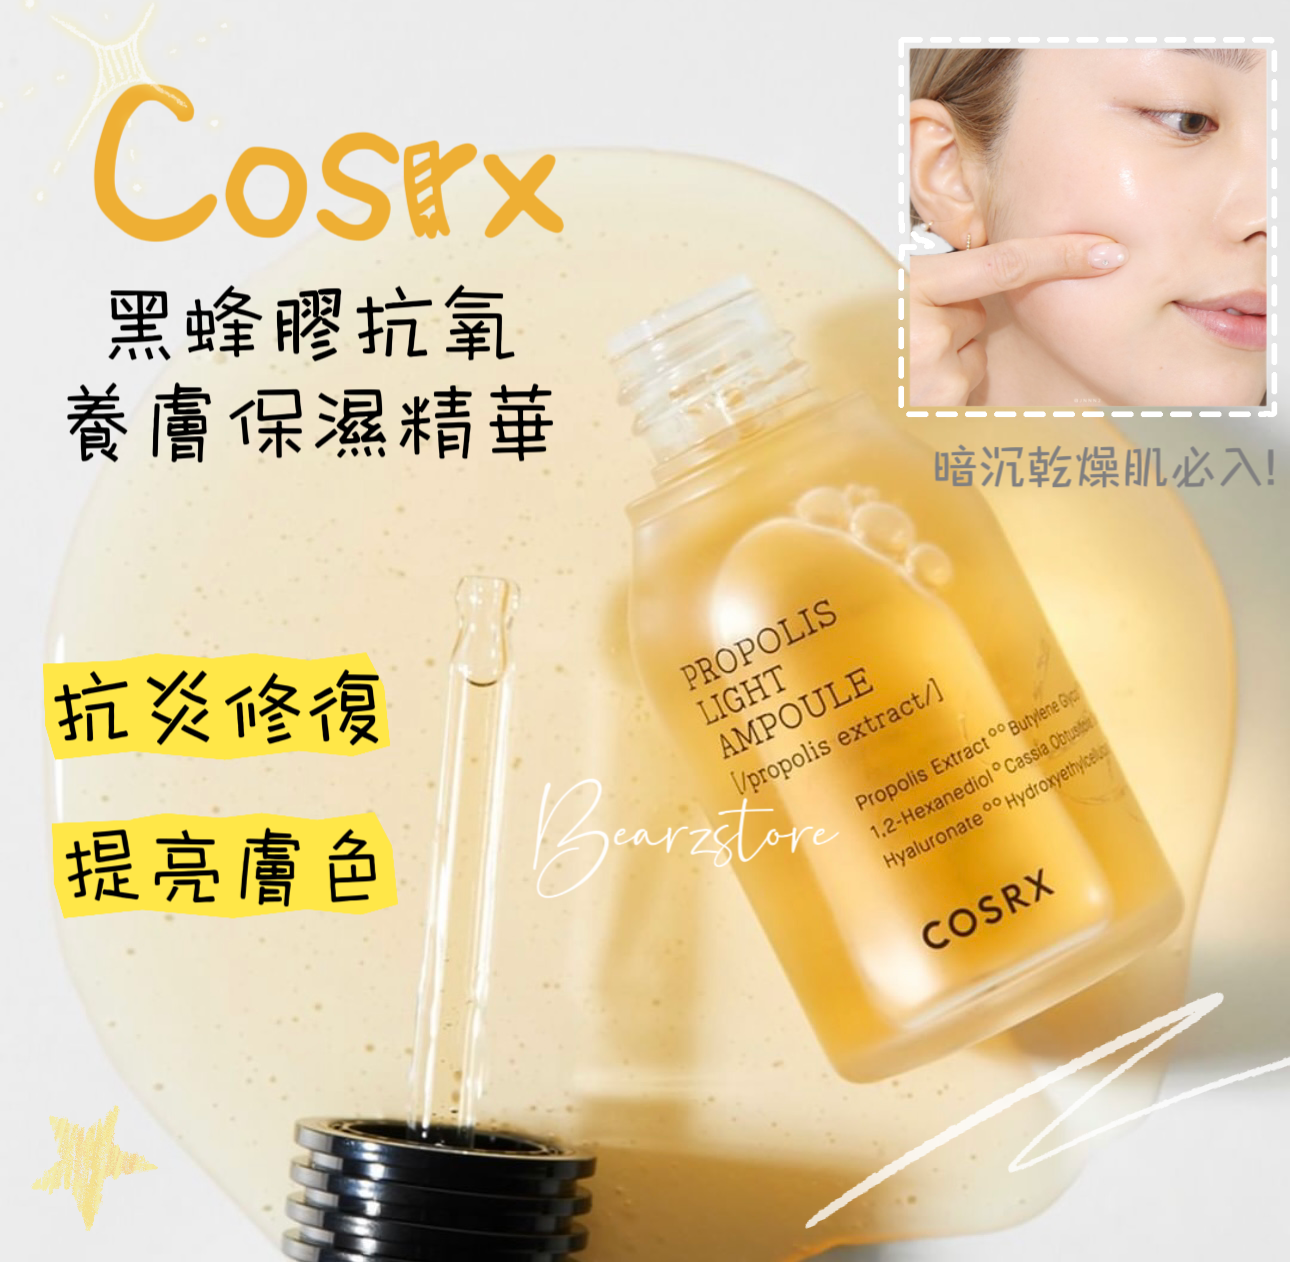 Cosrx法國黑蜂膠抗氧養膚保濕精華🐝 暗沉乾燥肌必入|抗炎修復、提亮膚色| 韓國女生水光肌愛用😍